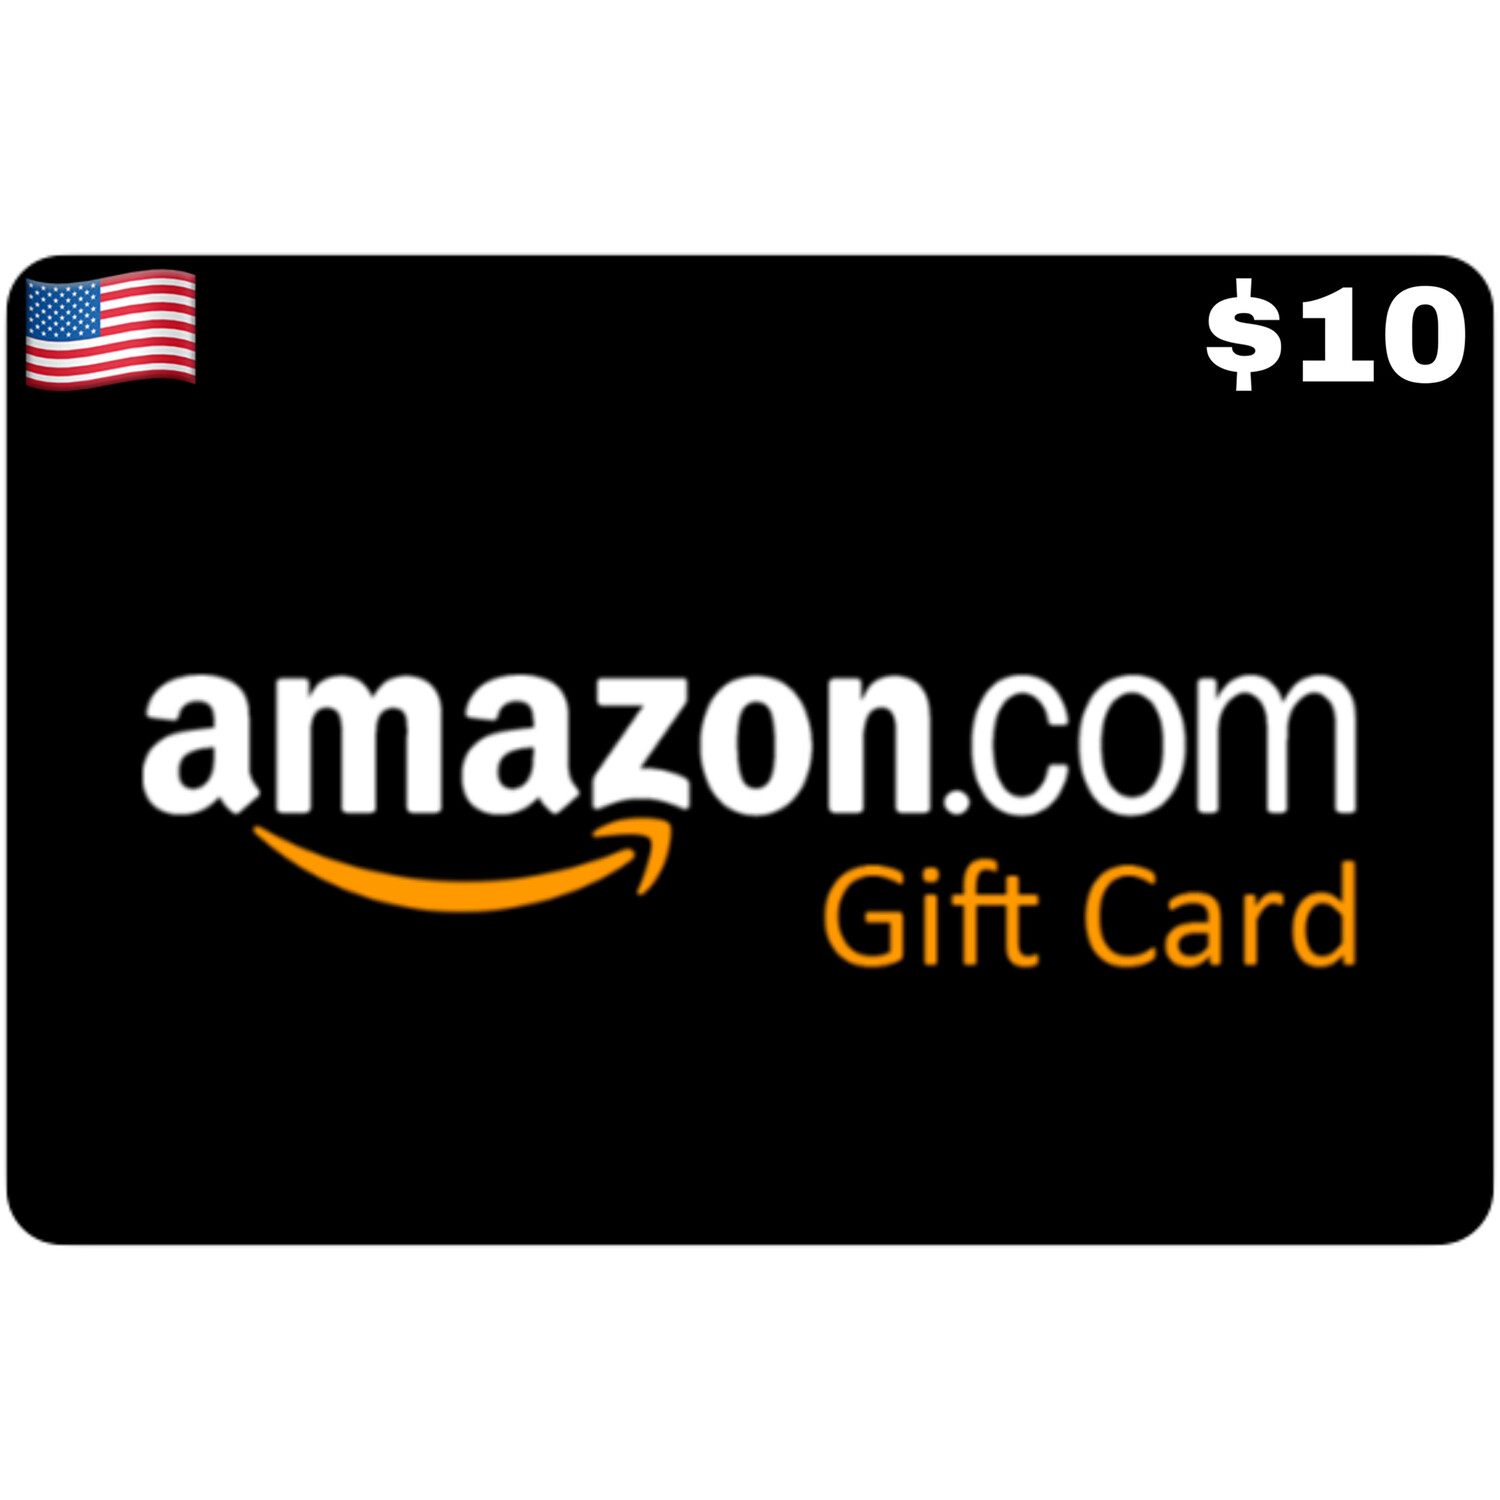 Amazon.com Gift Card US $10 Code